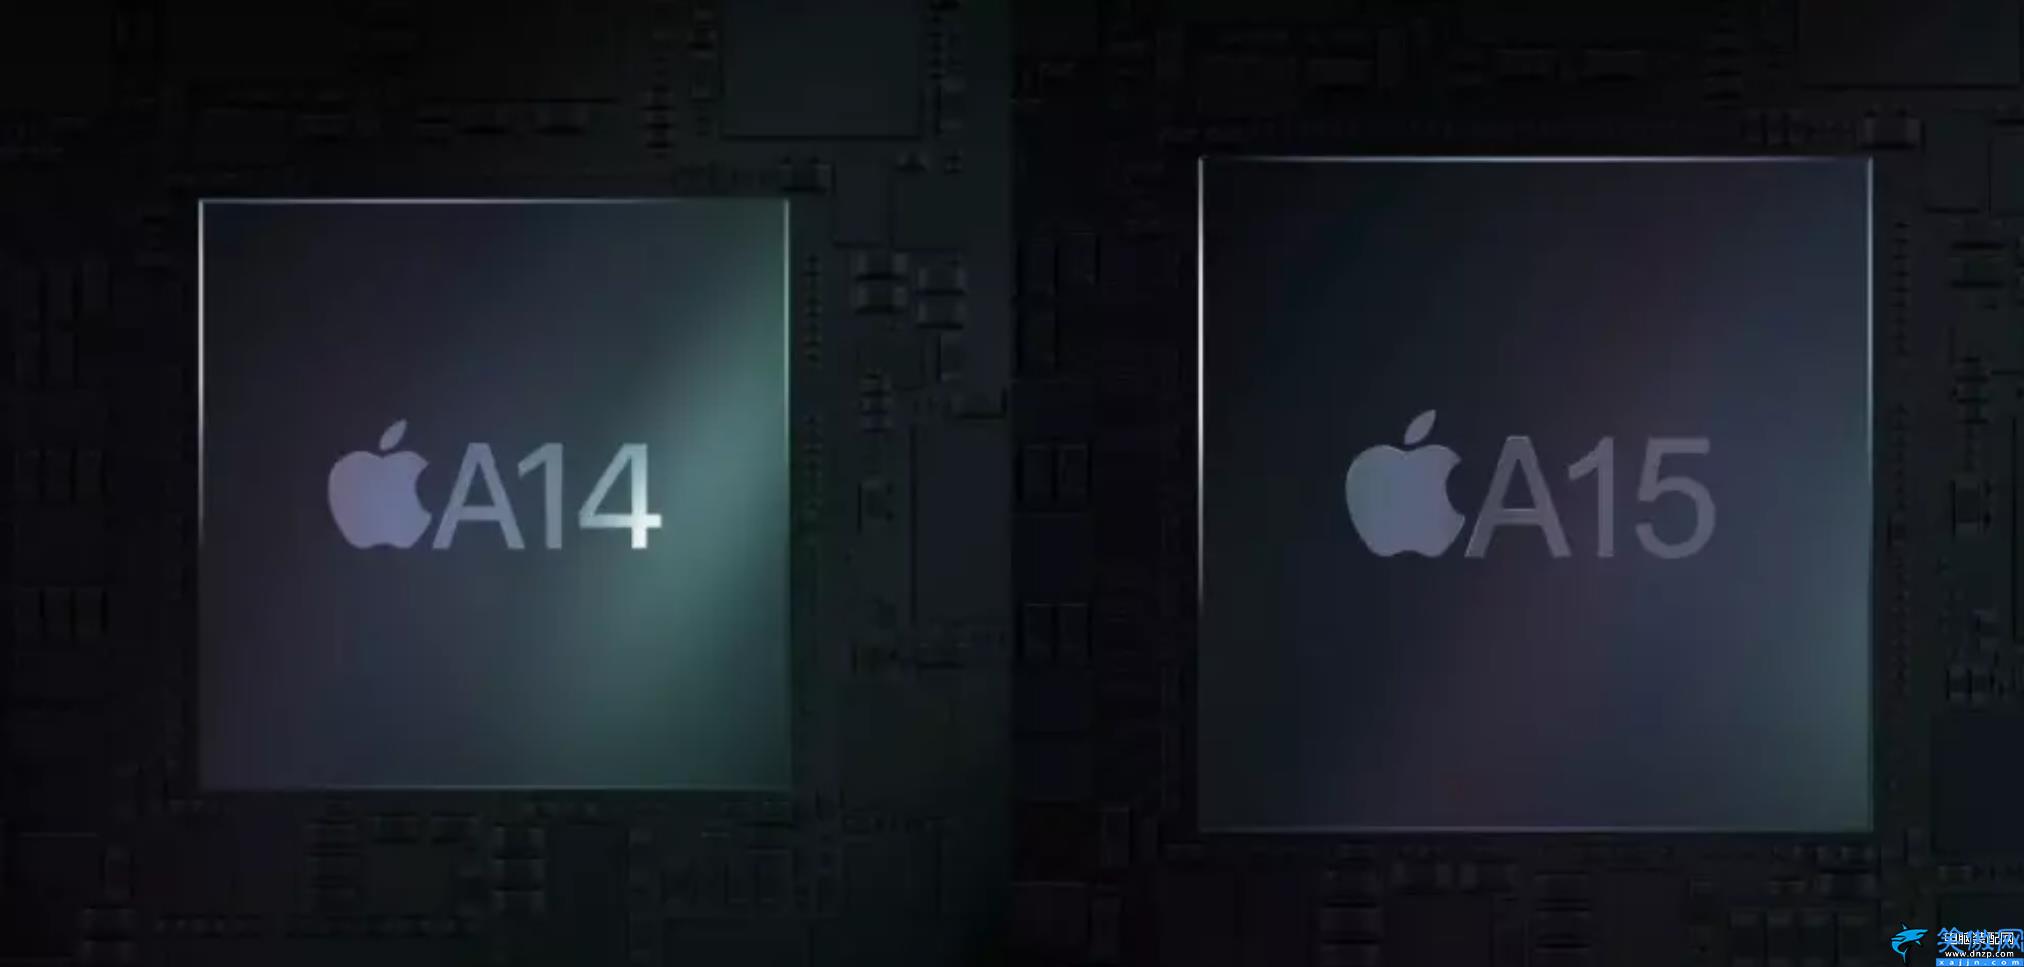 iphone 12和13有什么区别,苹果12和13之间的差异